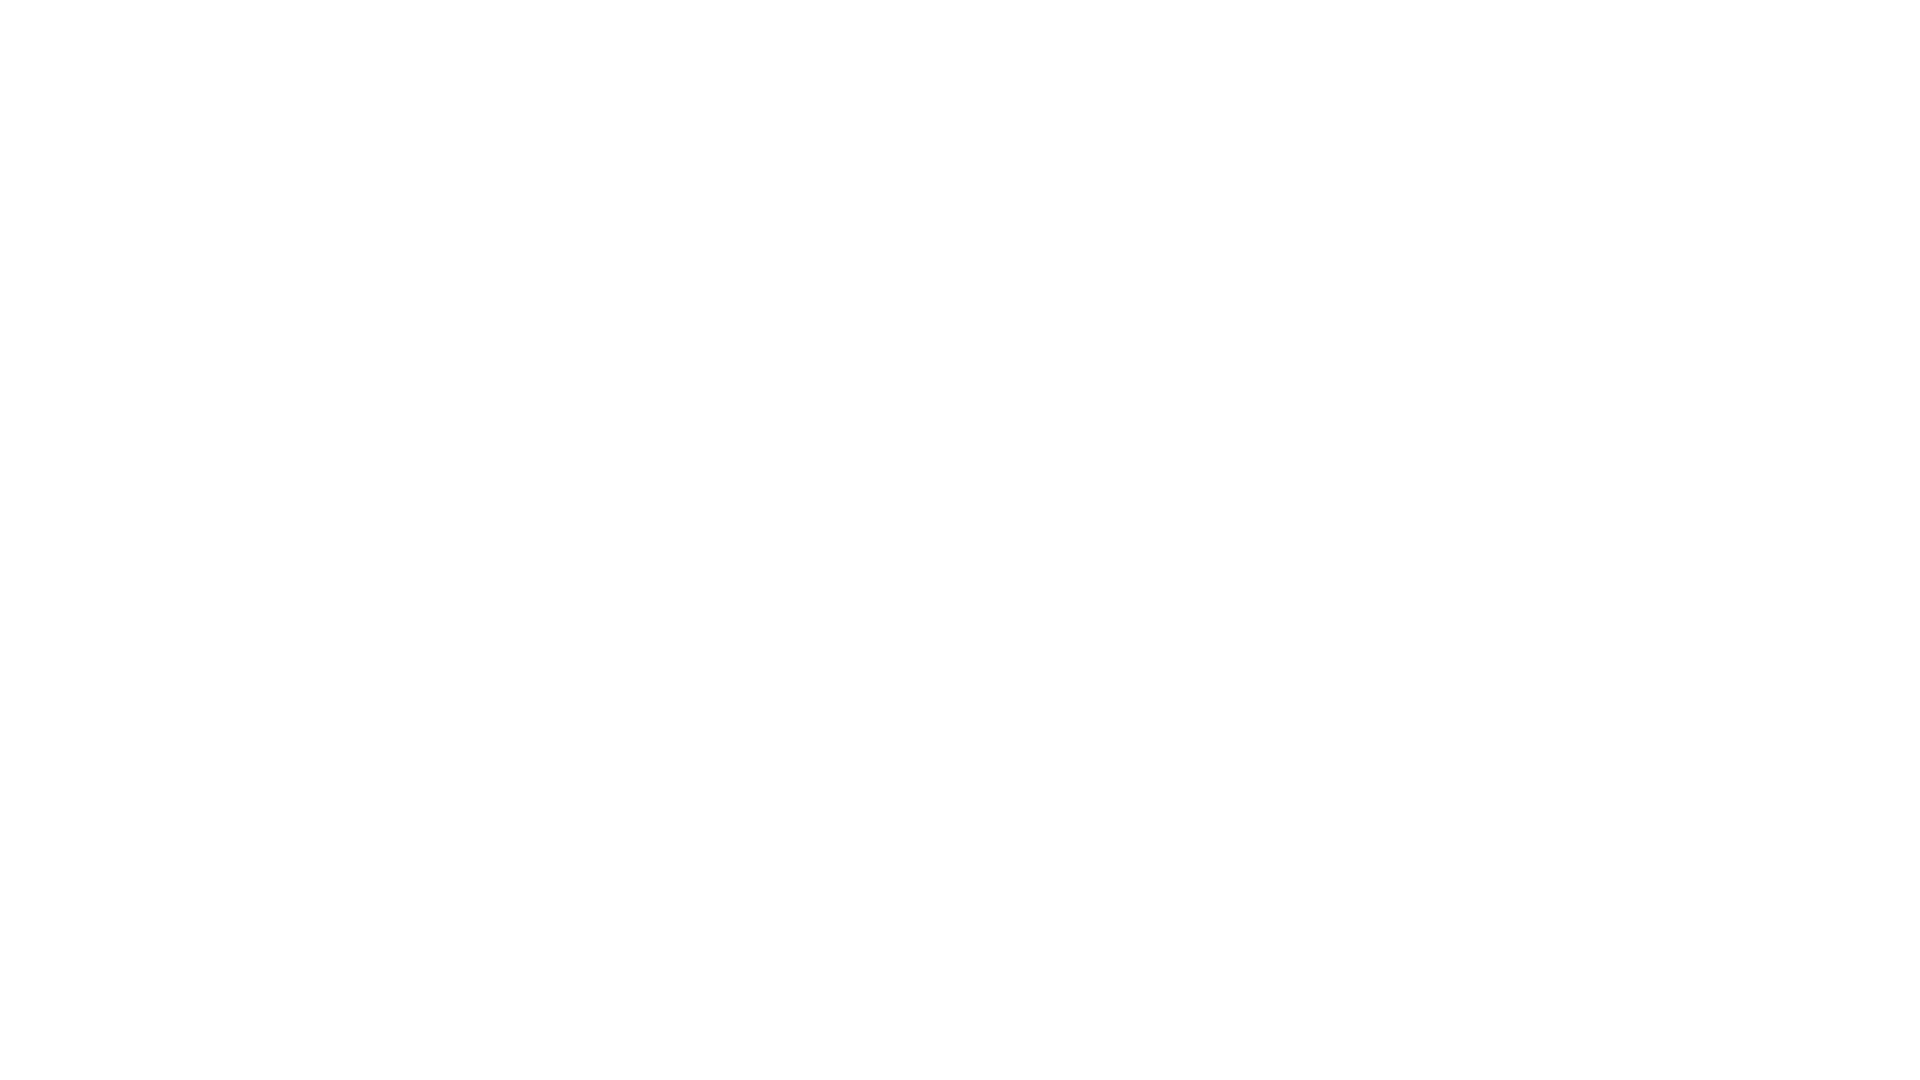 Yle logo